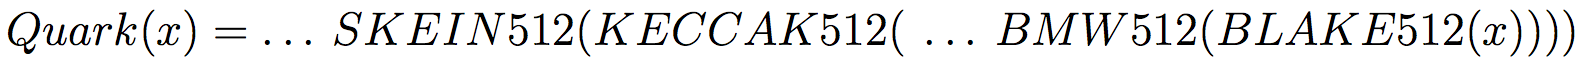 Quark(x) = ... SKEIN512(KECCAK512( ... BMW512(BLAKE512(x))))